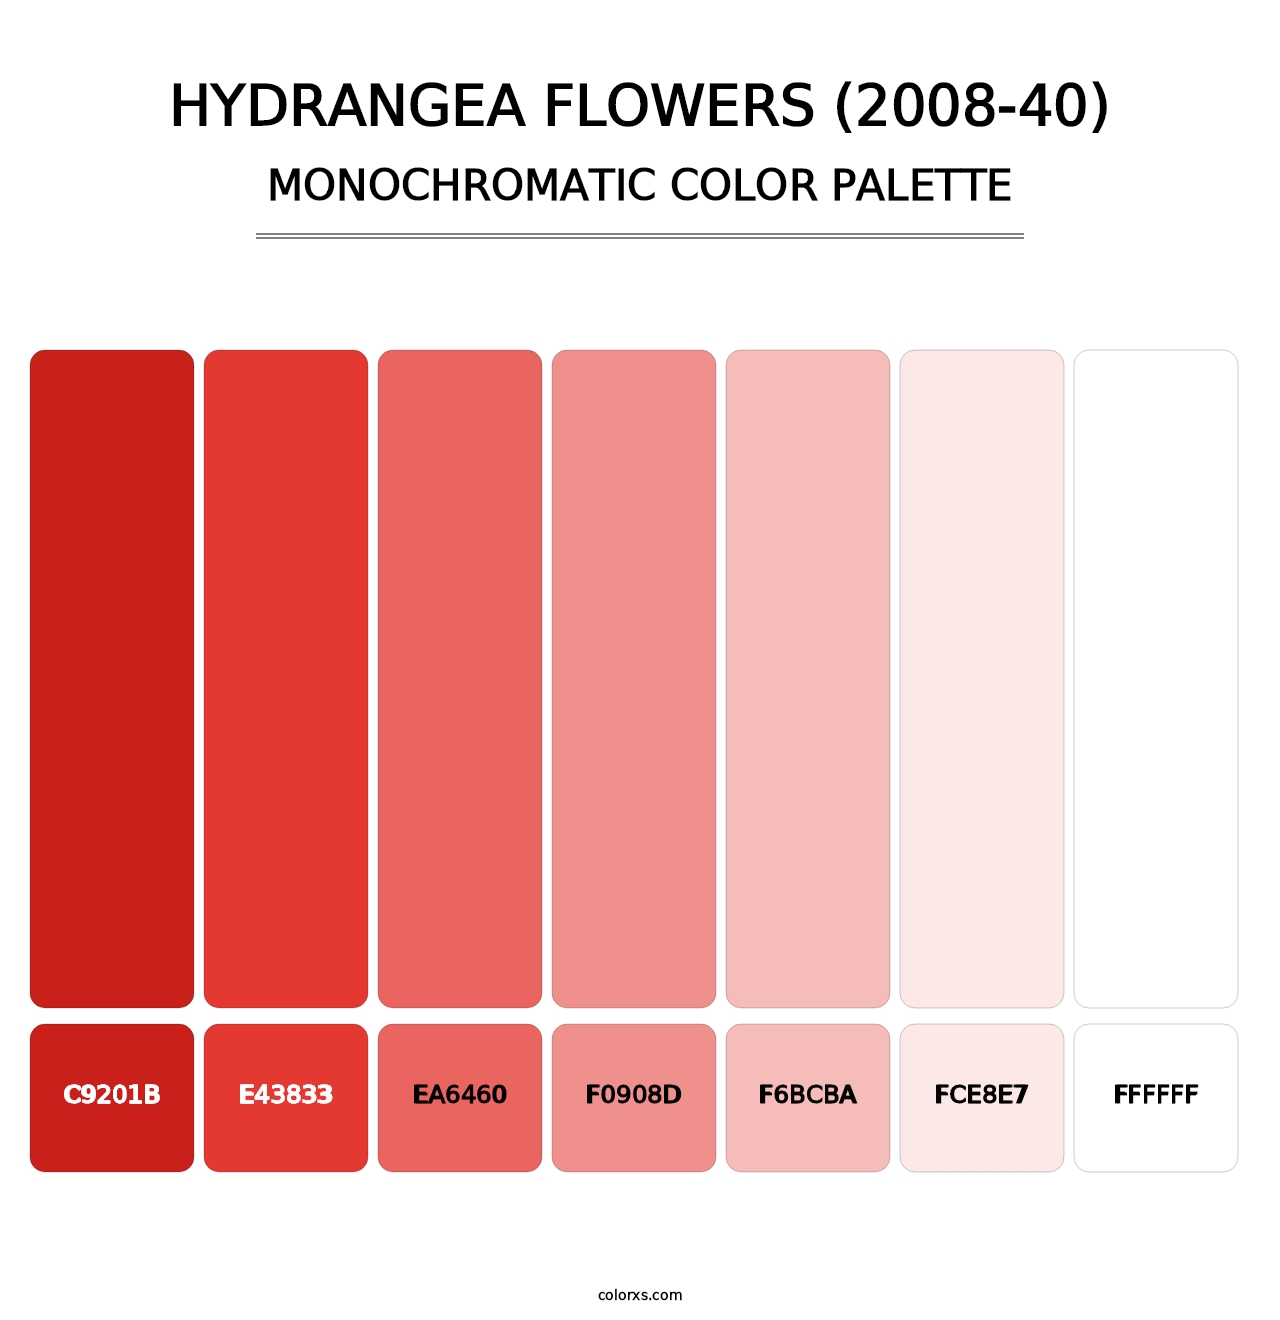 Hydrangea Flowers (2008-40) - Monochromatic Color Palette